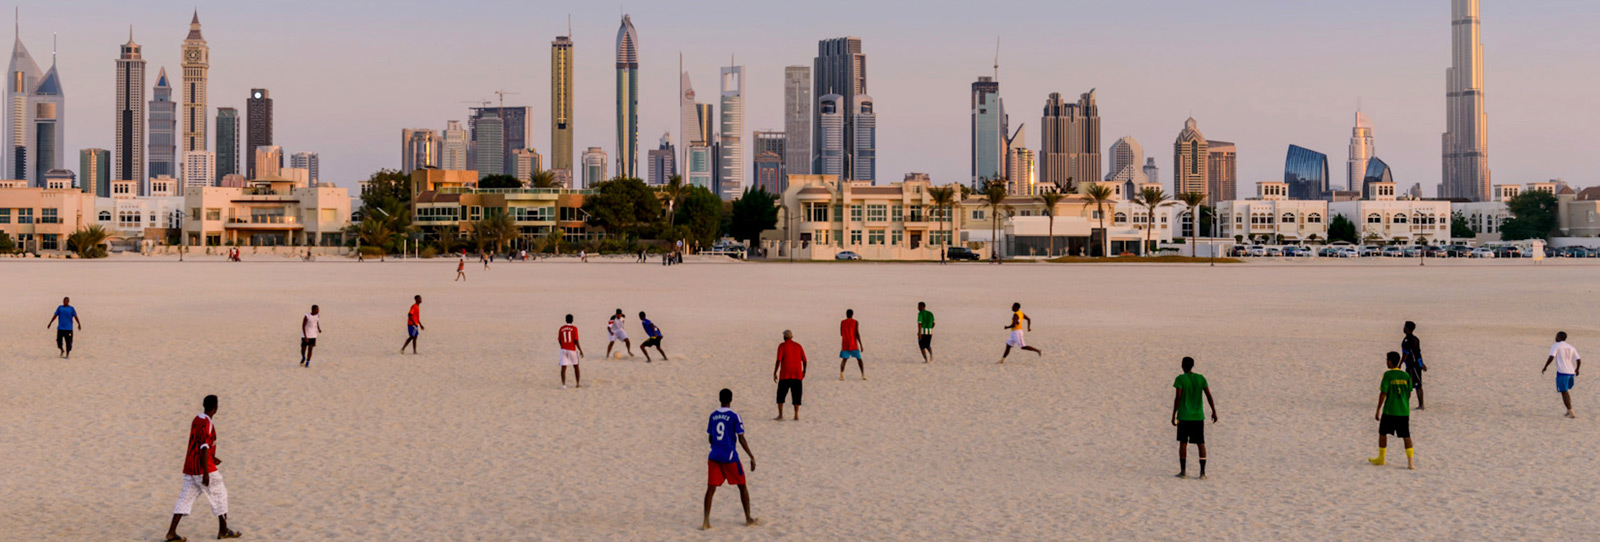 FirstLook: Jumeirah Beach, Dubai